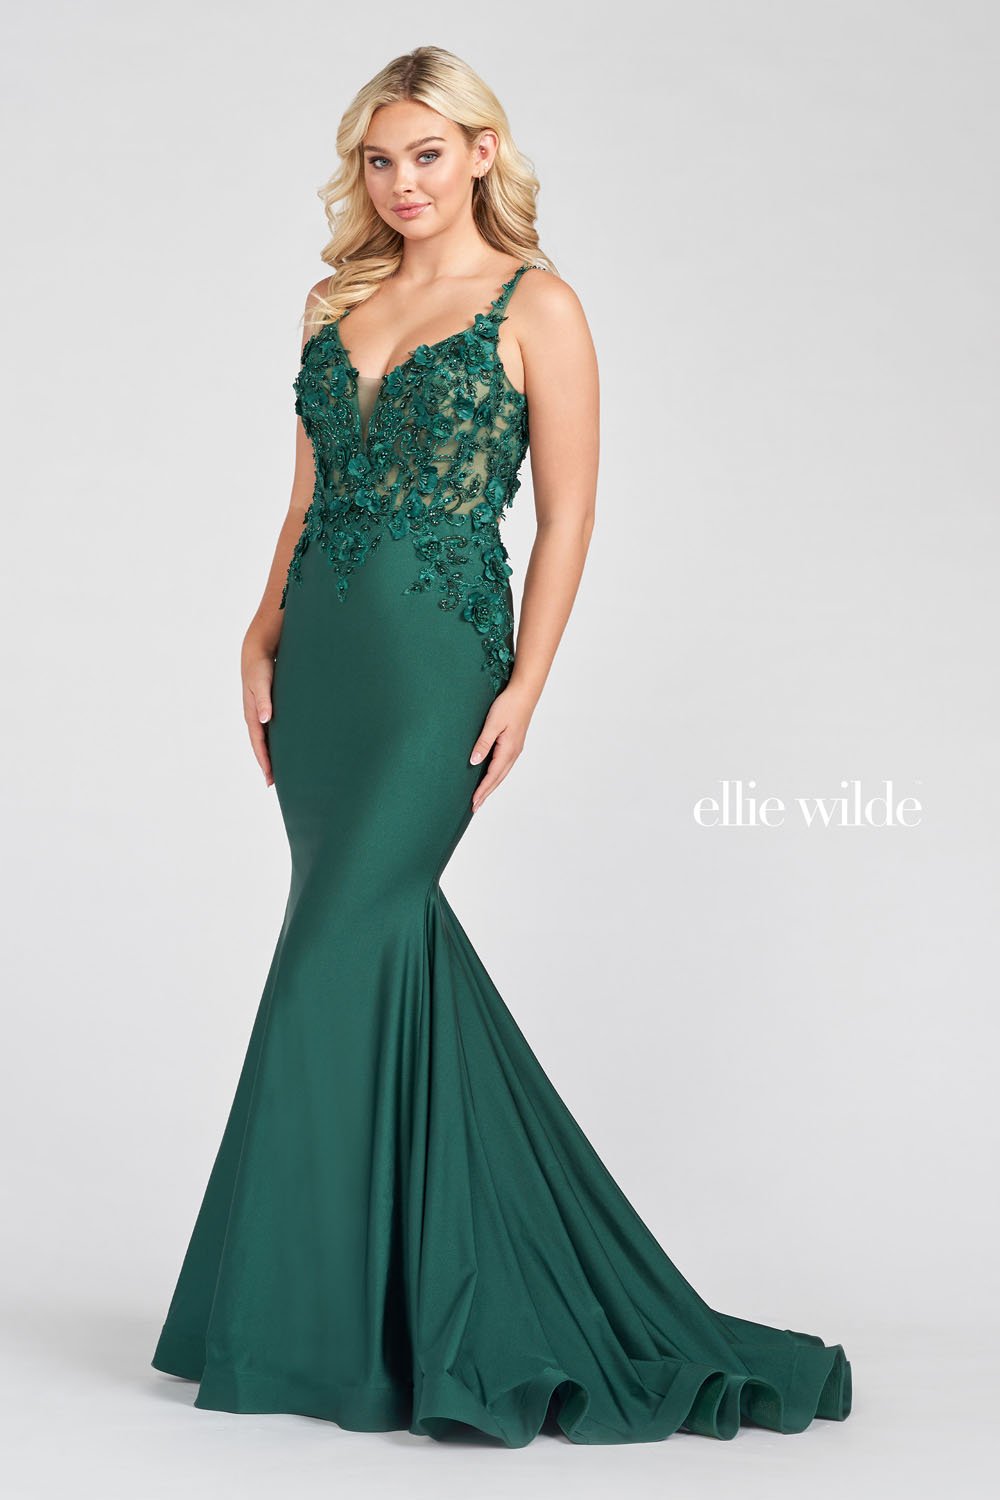 Ellie Wilde Emerald EW122041 Prom Dress Image.  Emerald formal dress.